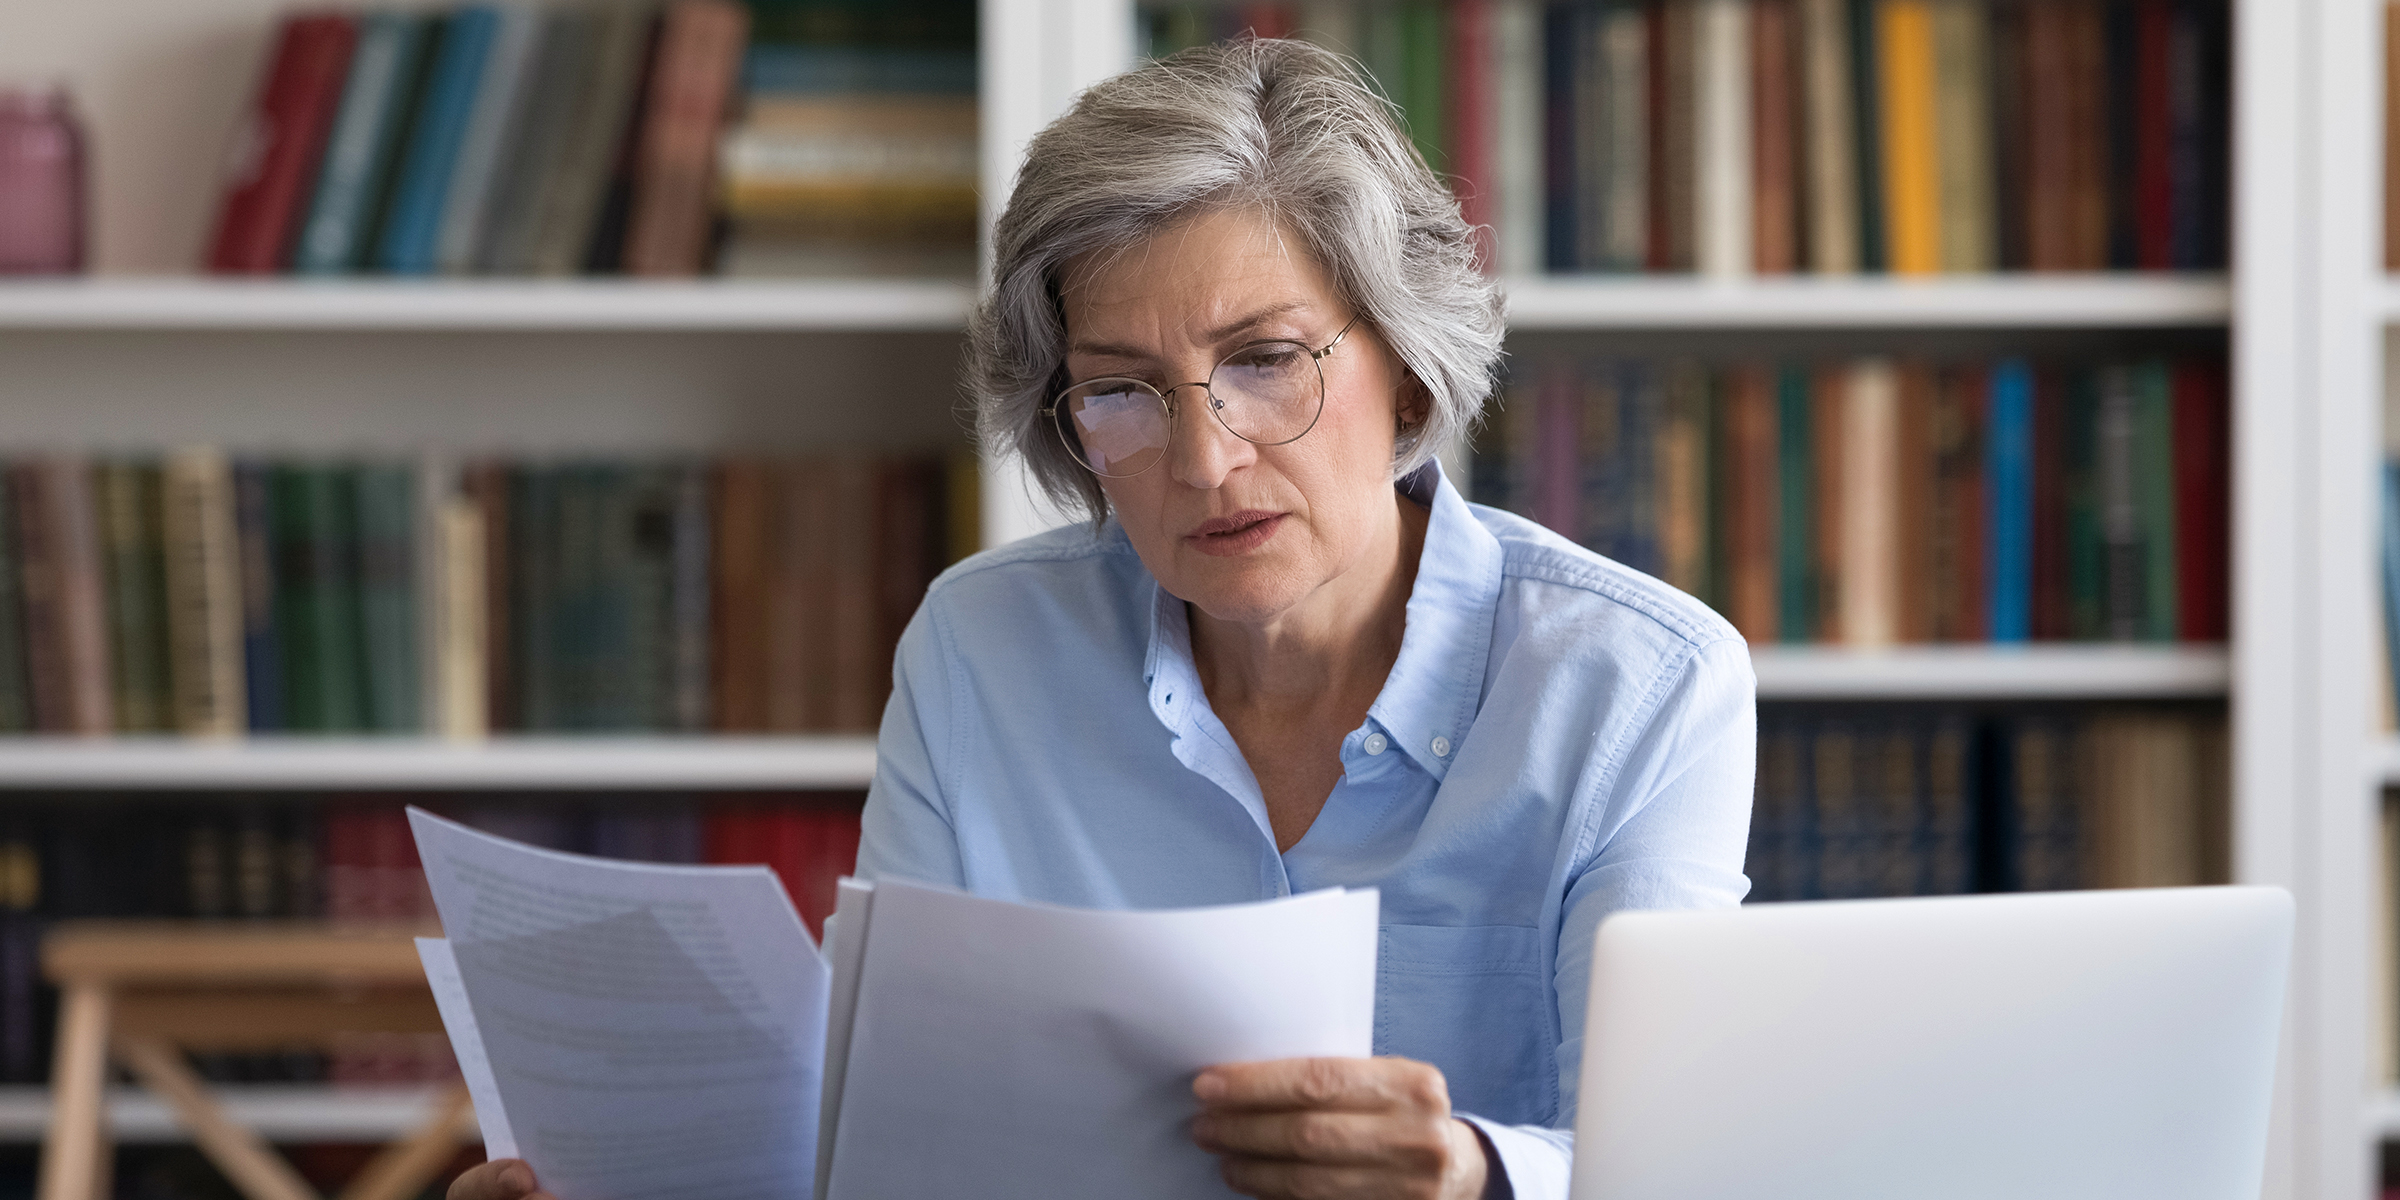 An elderly lady reading documents | Source: Shutterstock